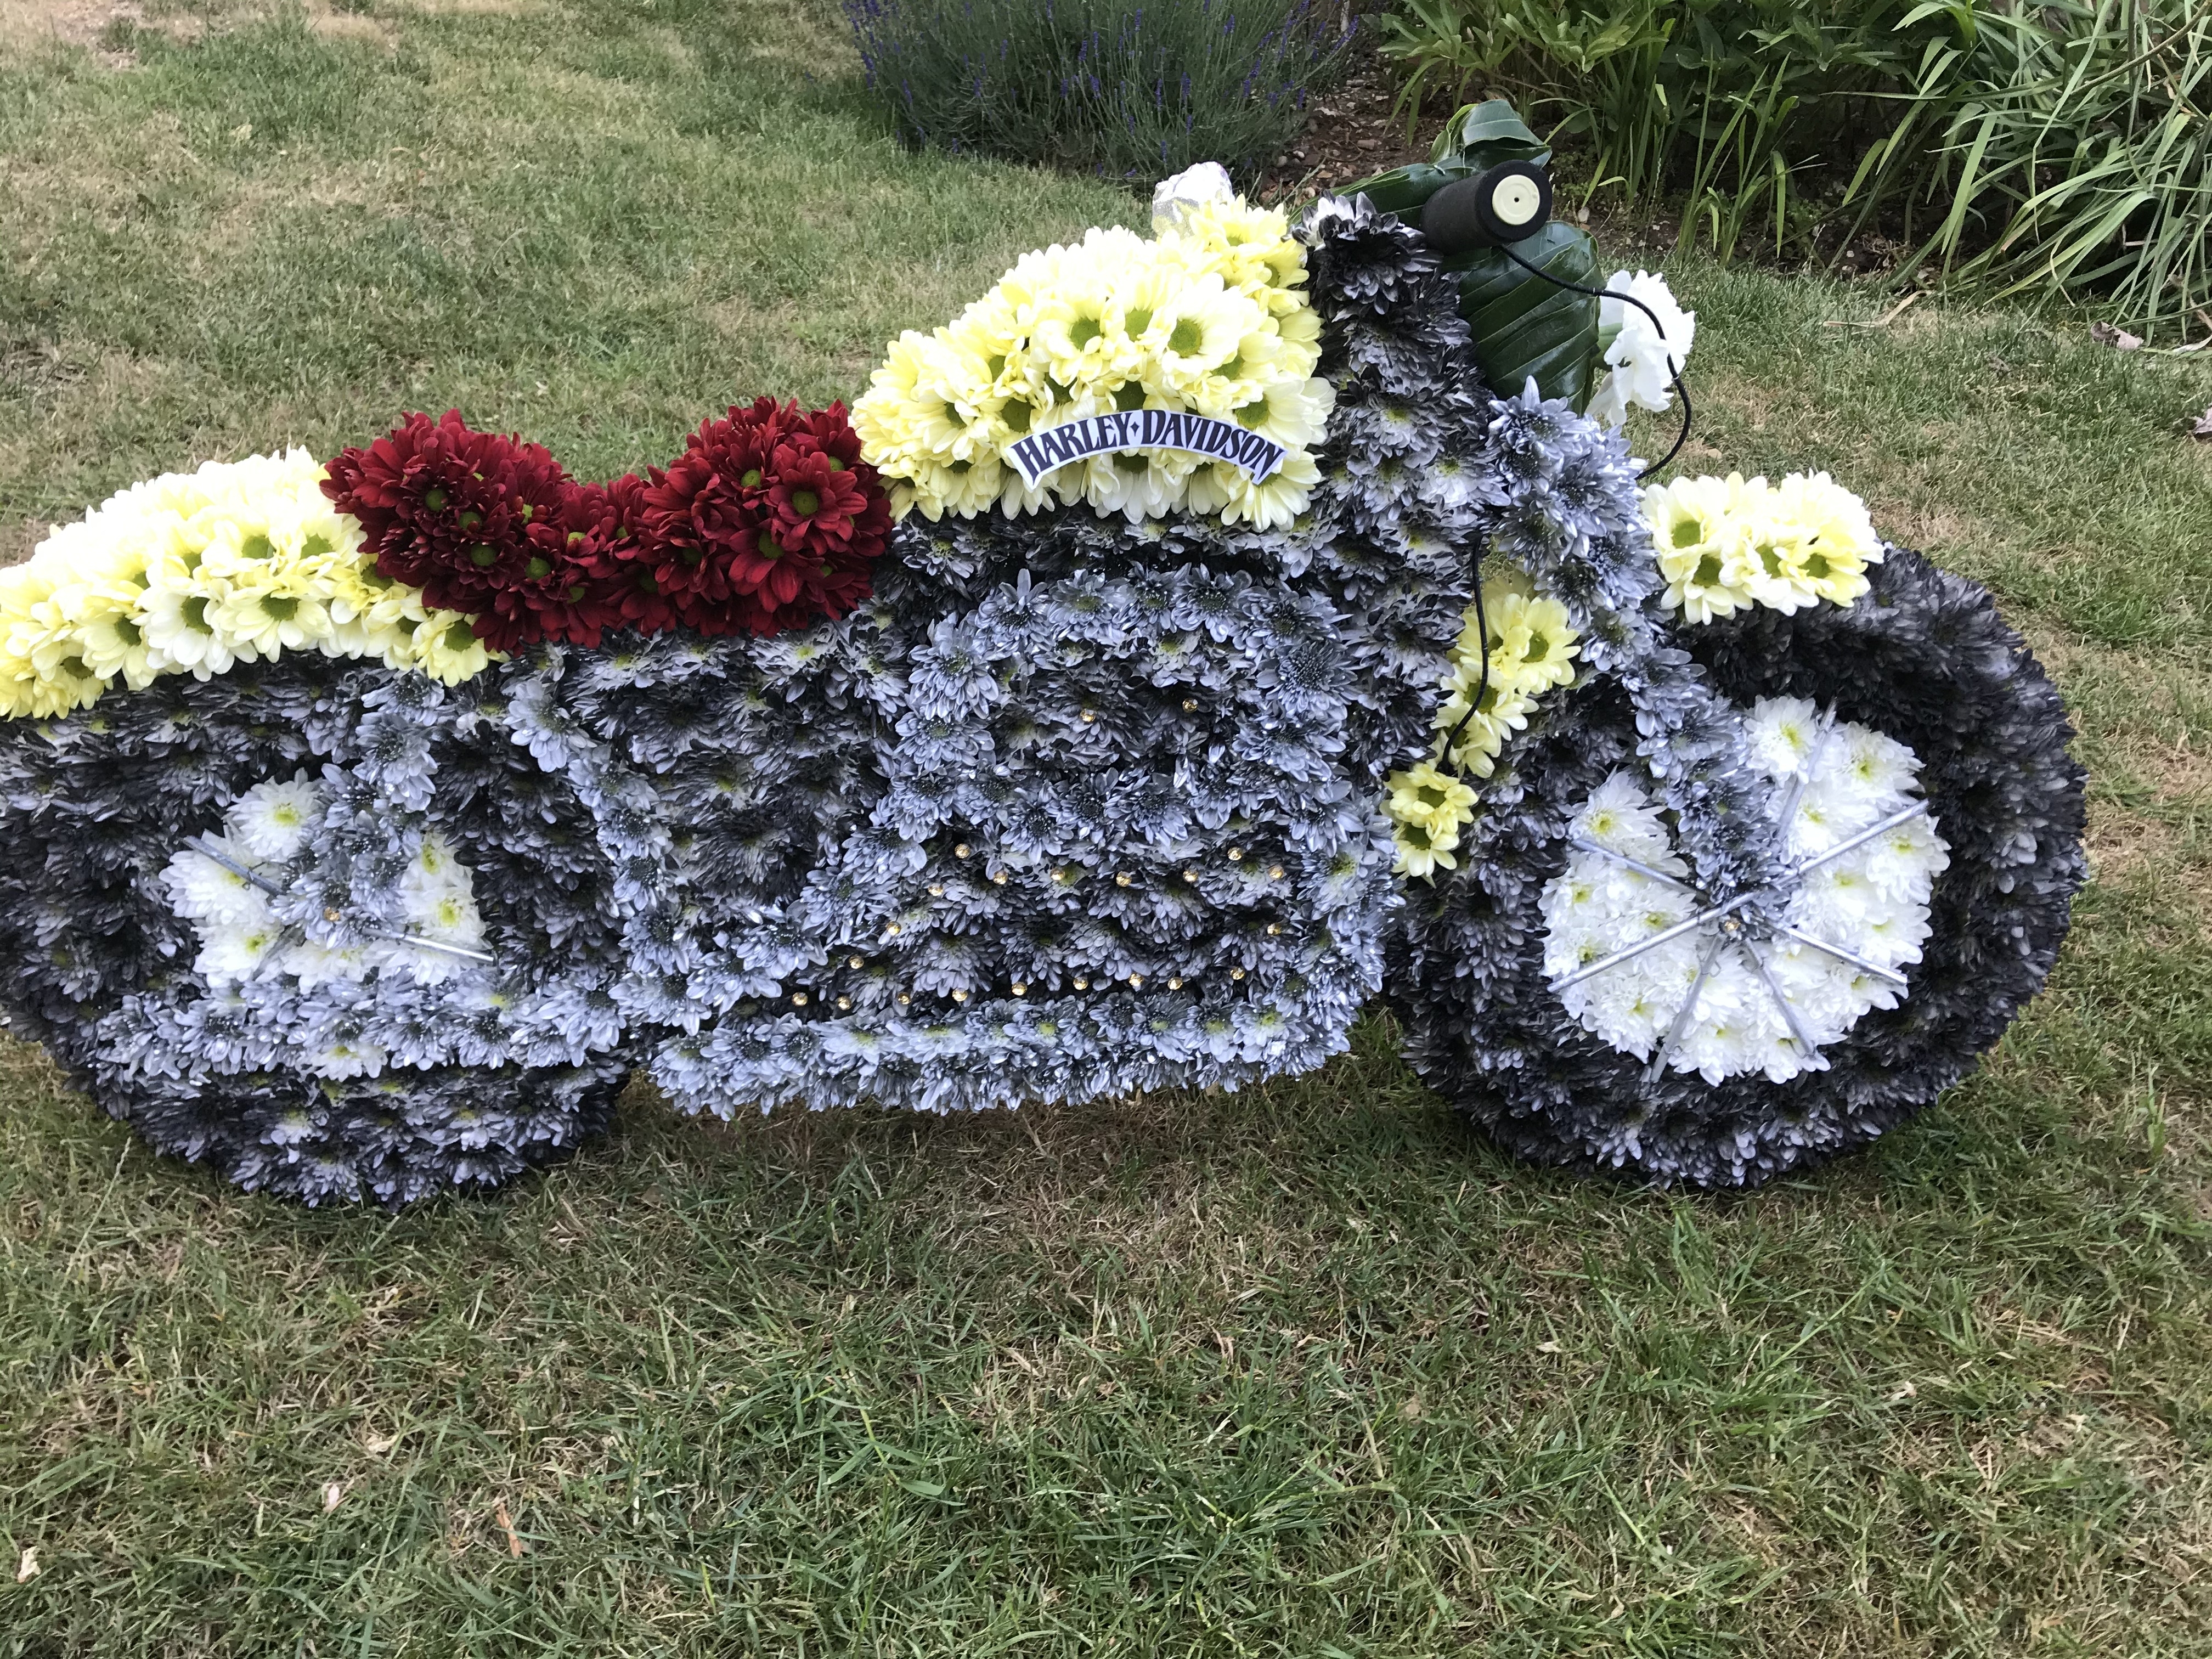 Harley Davidson Motorbike made from flowers